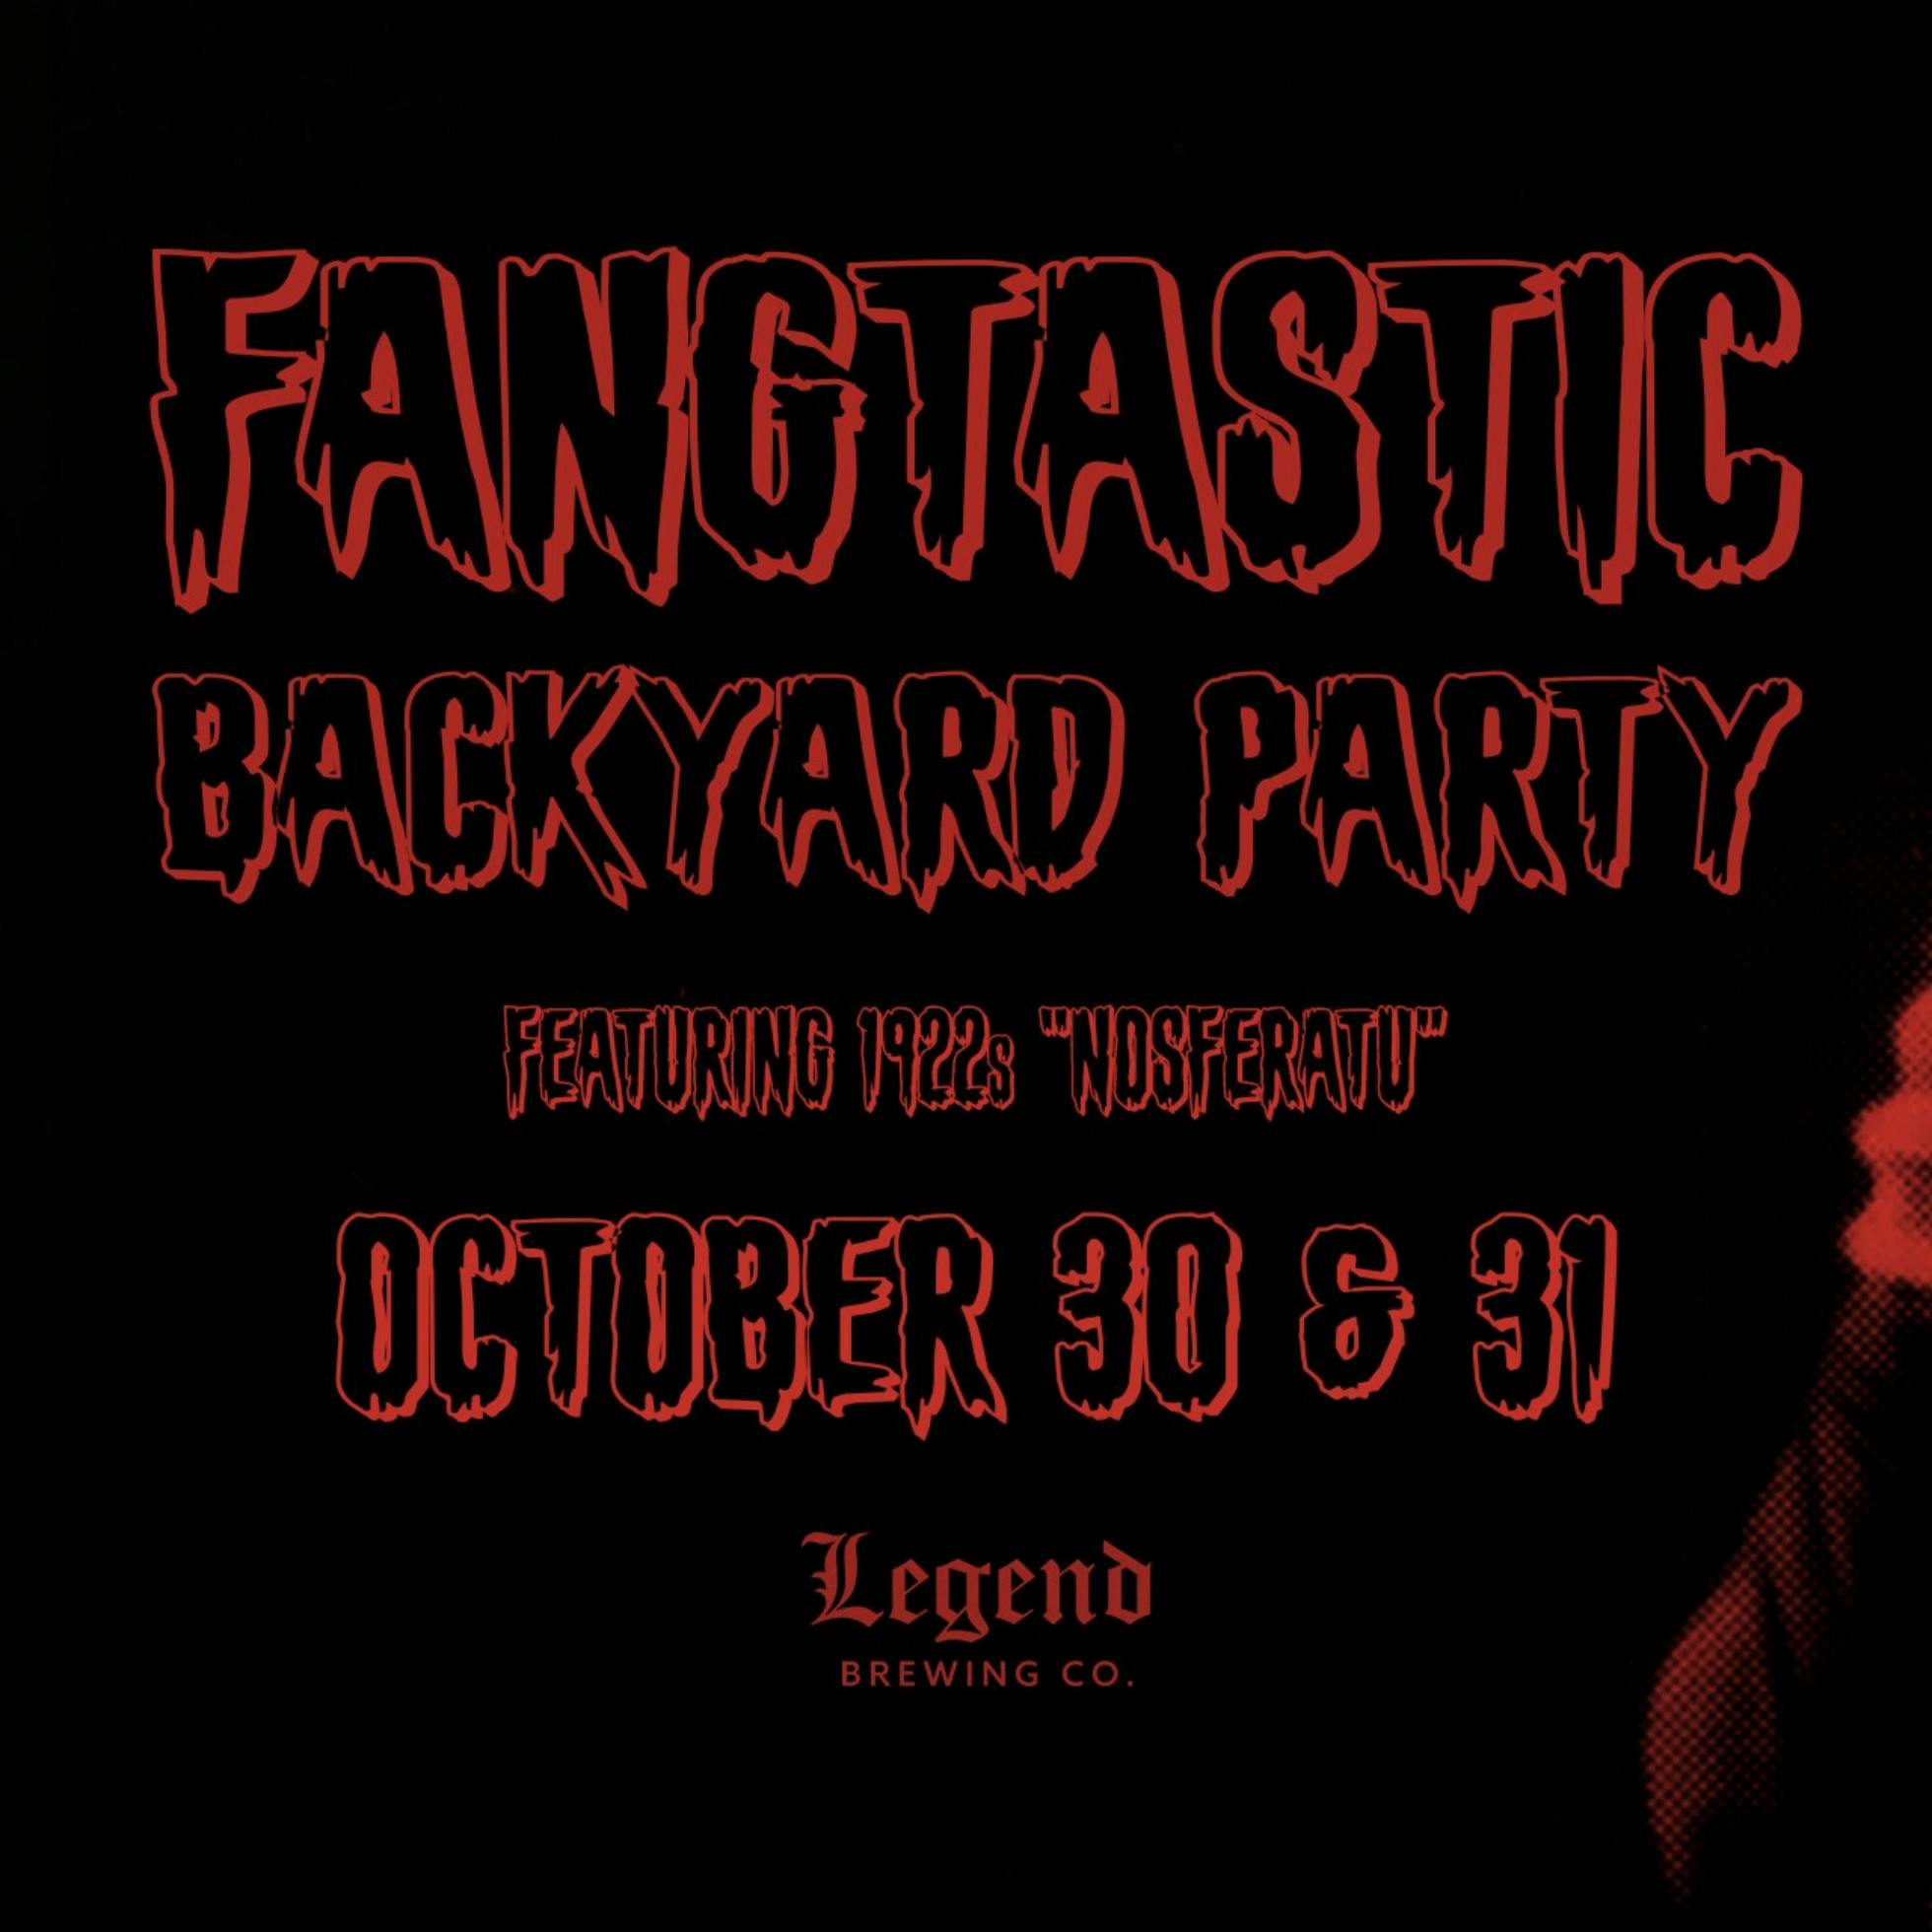 Legend Brewing's Fangtastic Backyard Party